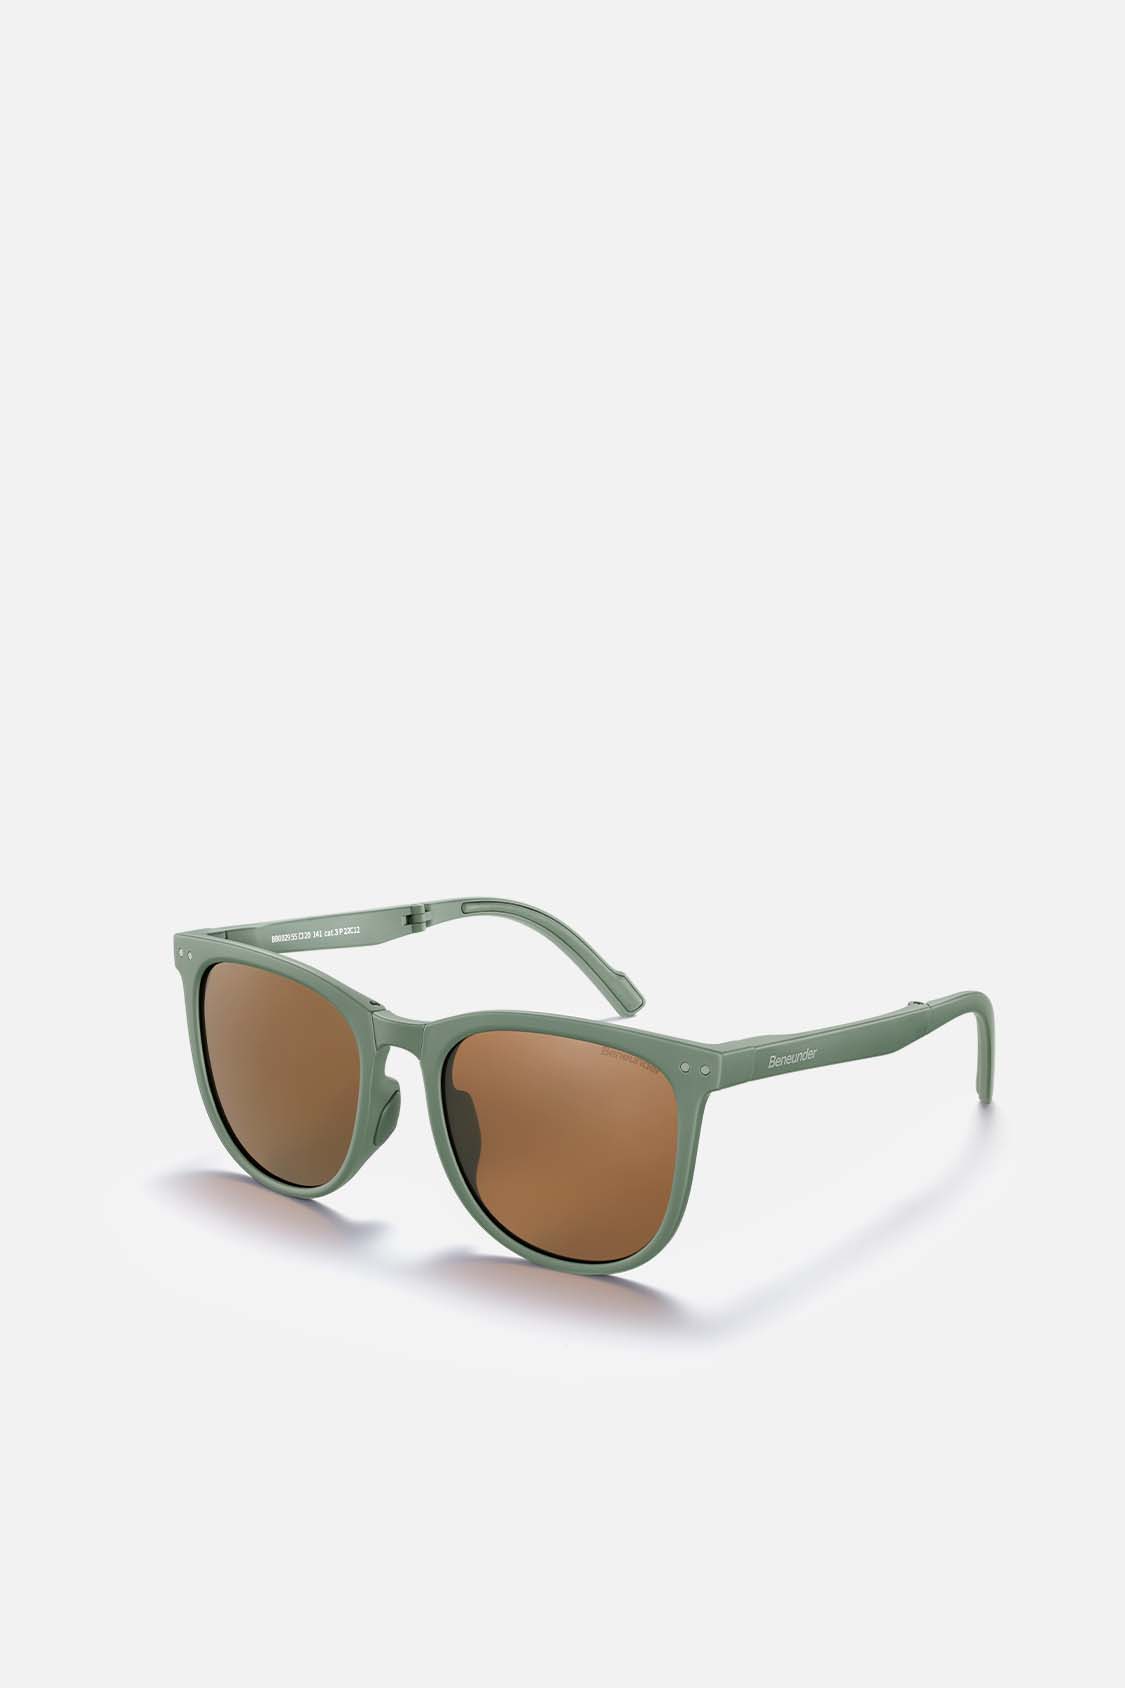 beneunder folding classic sunglasses uv400 #color_bamboo stonw green